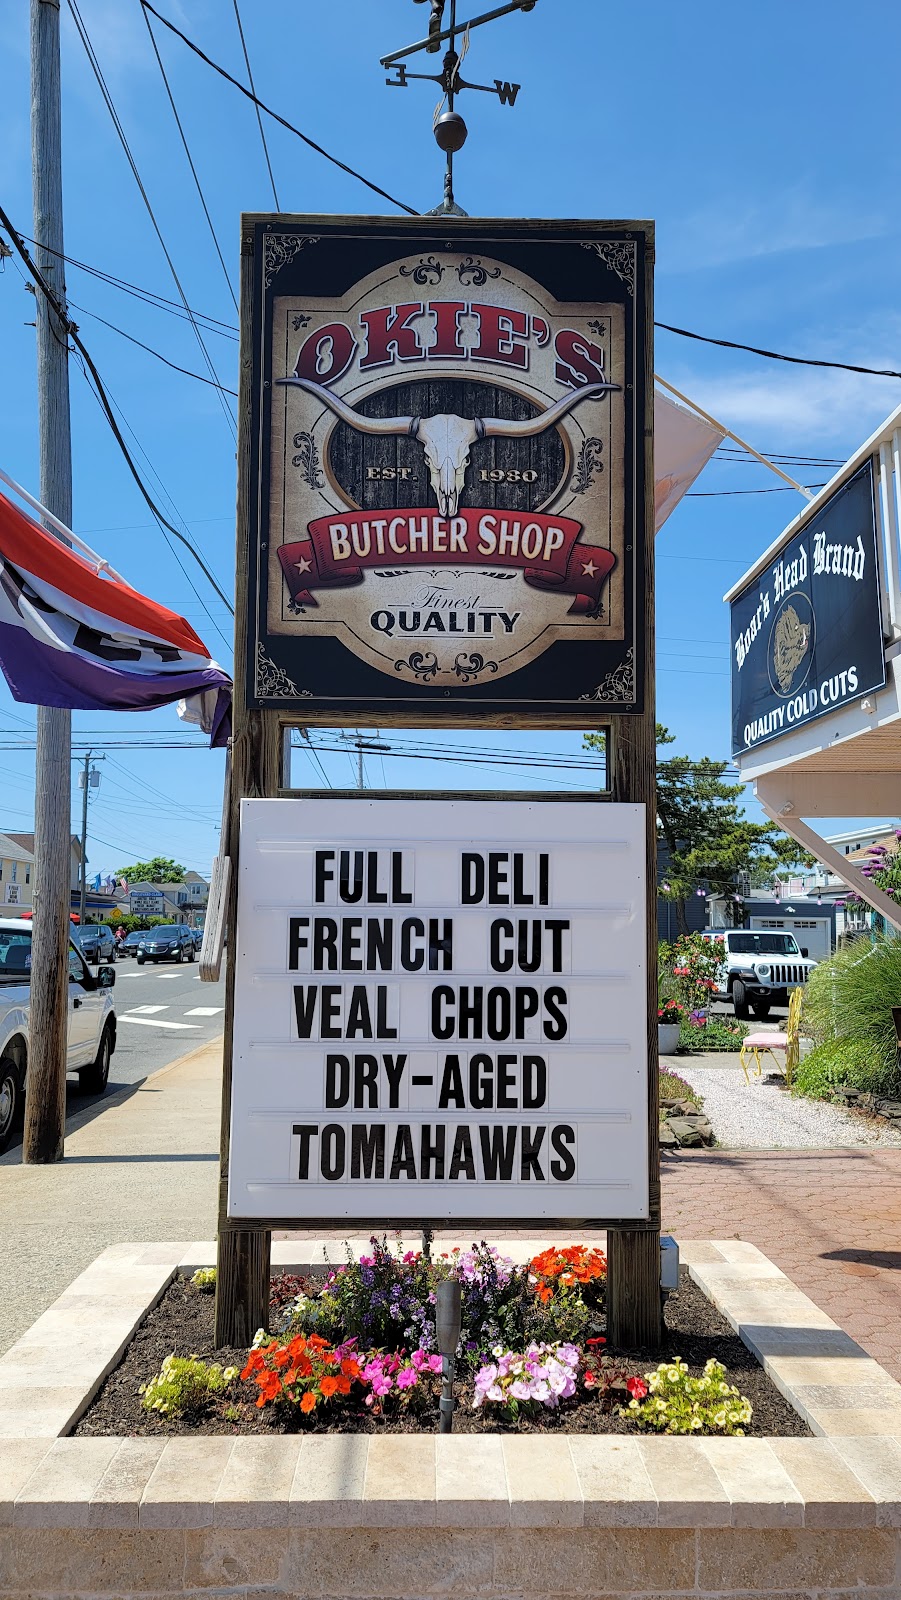 Okies Butcher Shop | 2107 Long Beach Blvd, Surf City, NJ 08008 | Phone: (609) 494-5577